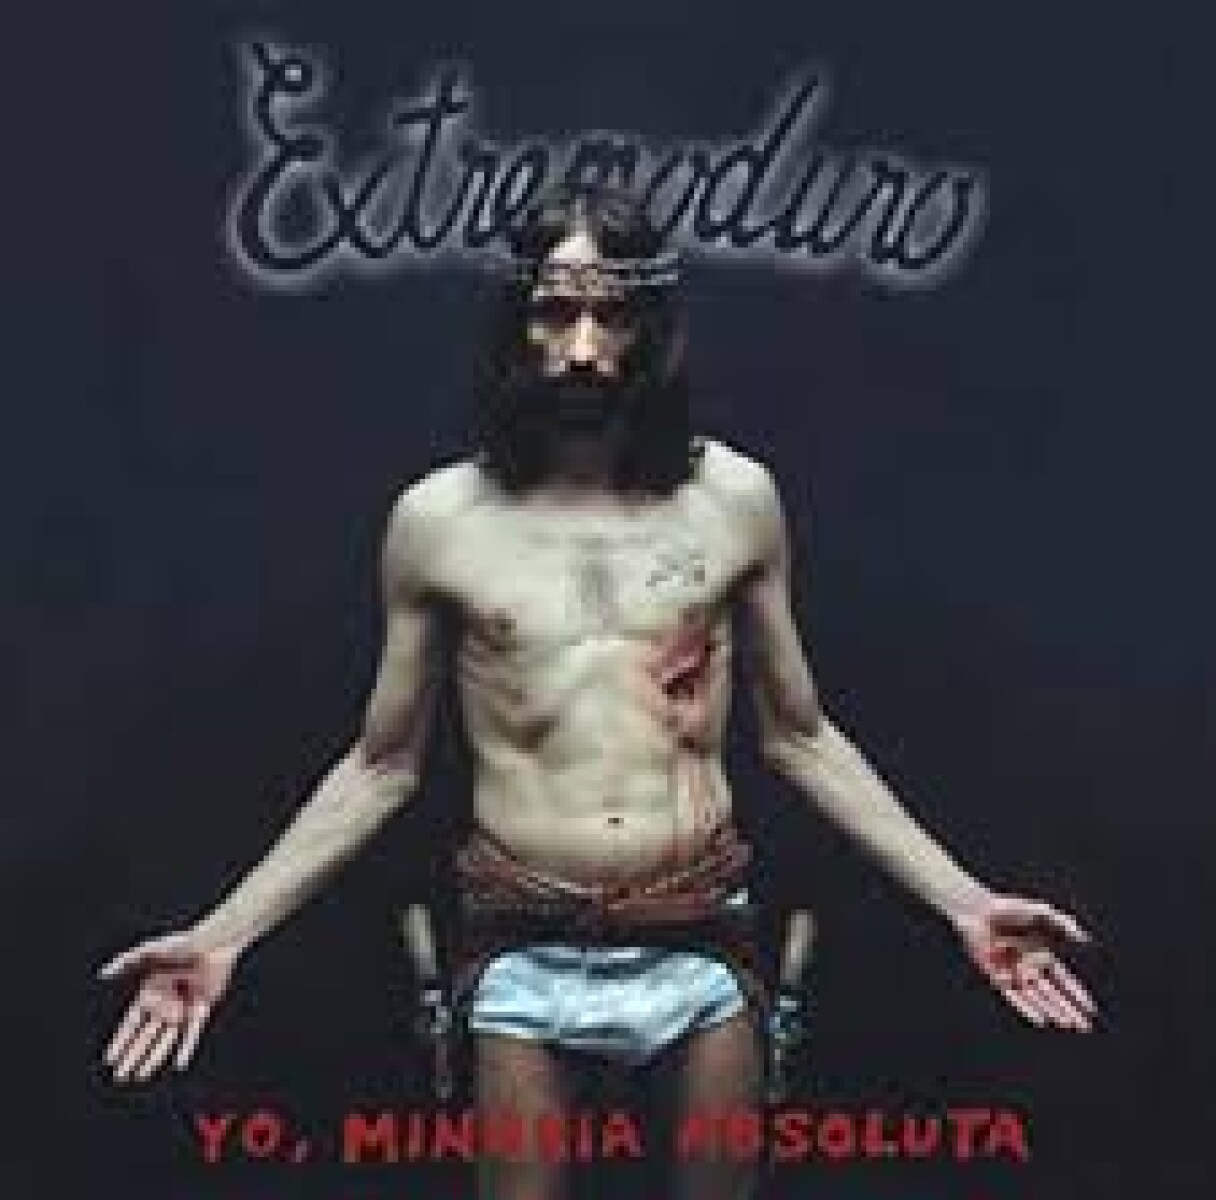 Extremoduro-yo Minoria Absoluta Version 2011 